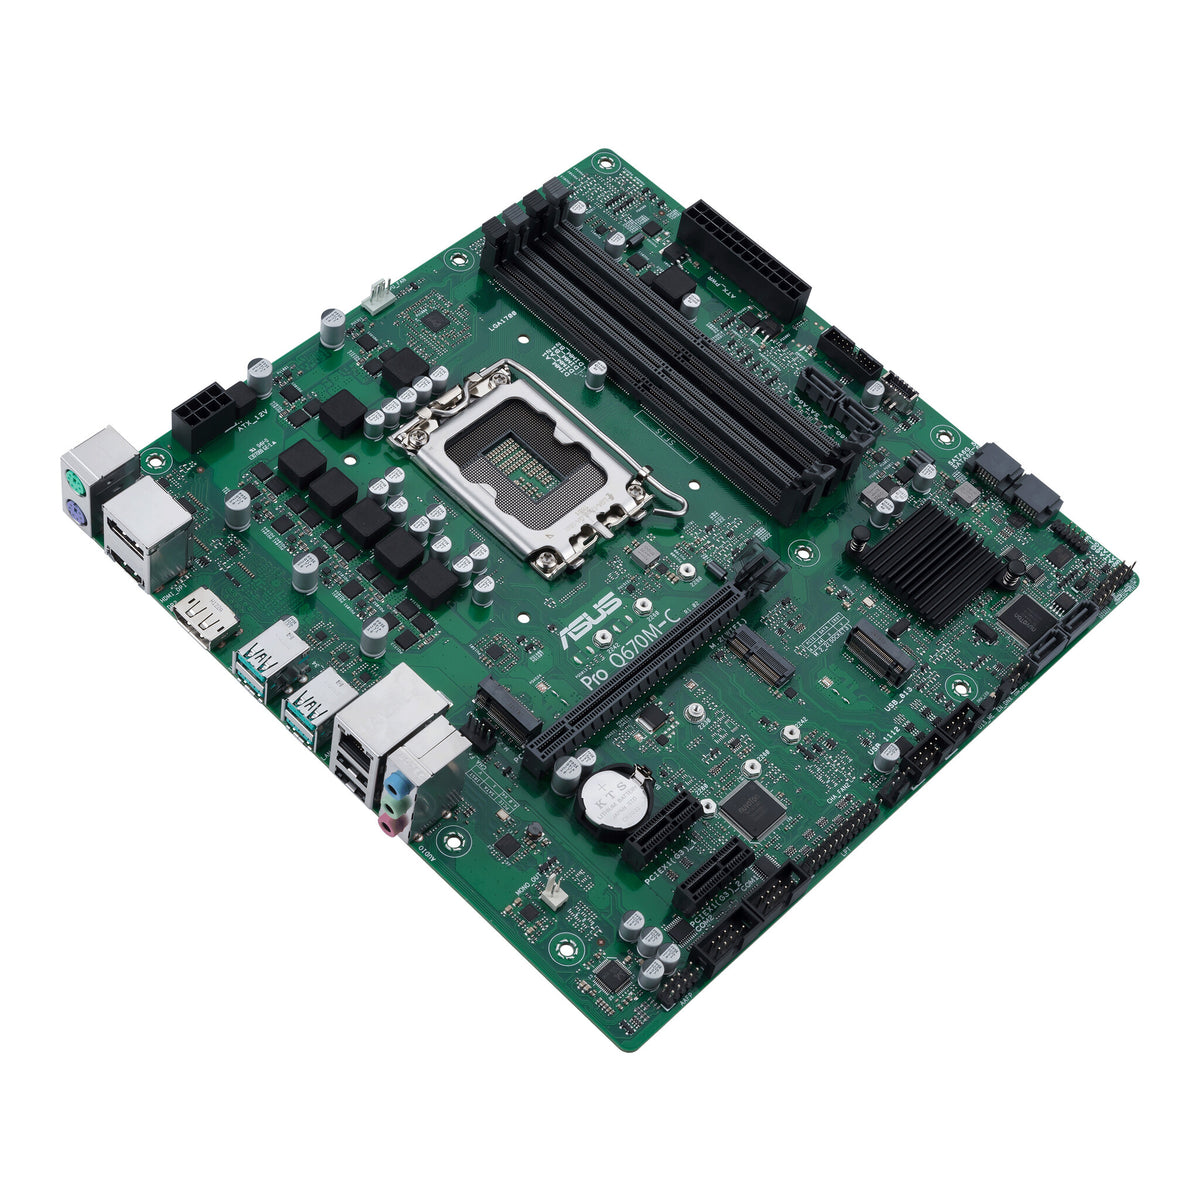 ASUS PRO Q670M-C-CSM micro ATX motherboard - Intel Q670 LGA 1700